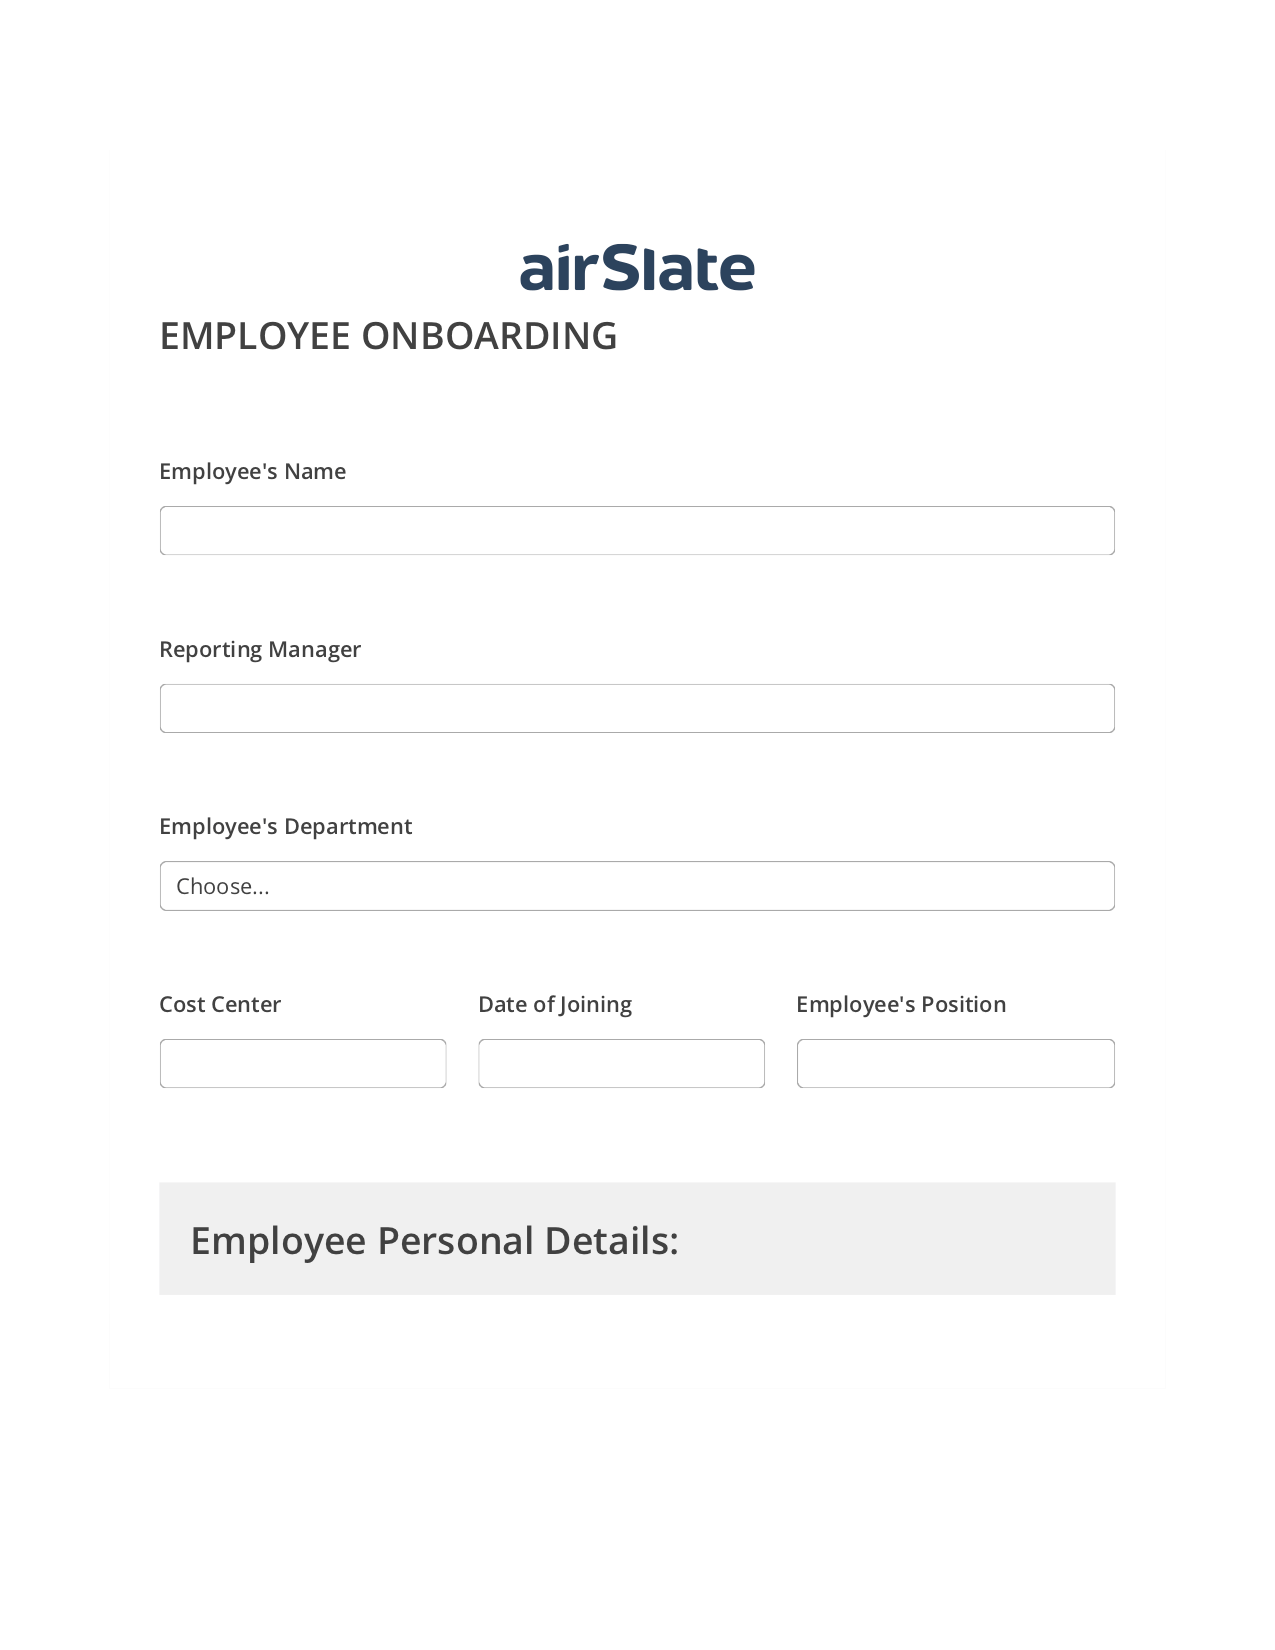 Employee Onboarding Workflow Pre-fill Slate from MS Dynamics 365 record, Create Slate every Google Sheet Update Bot, Export to Smartsheet